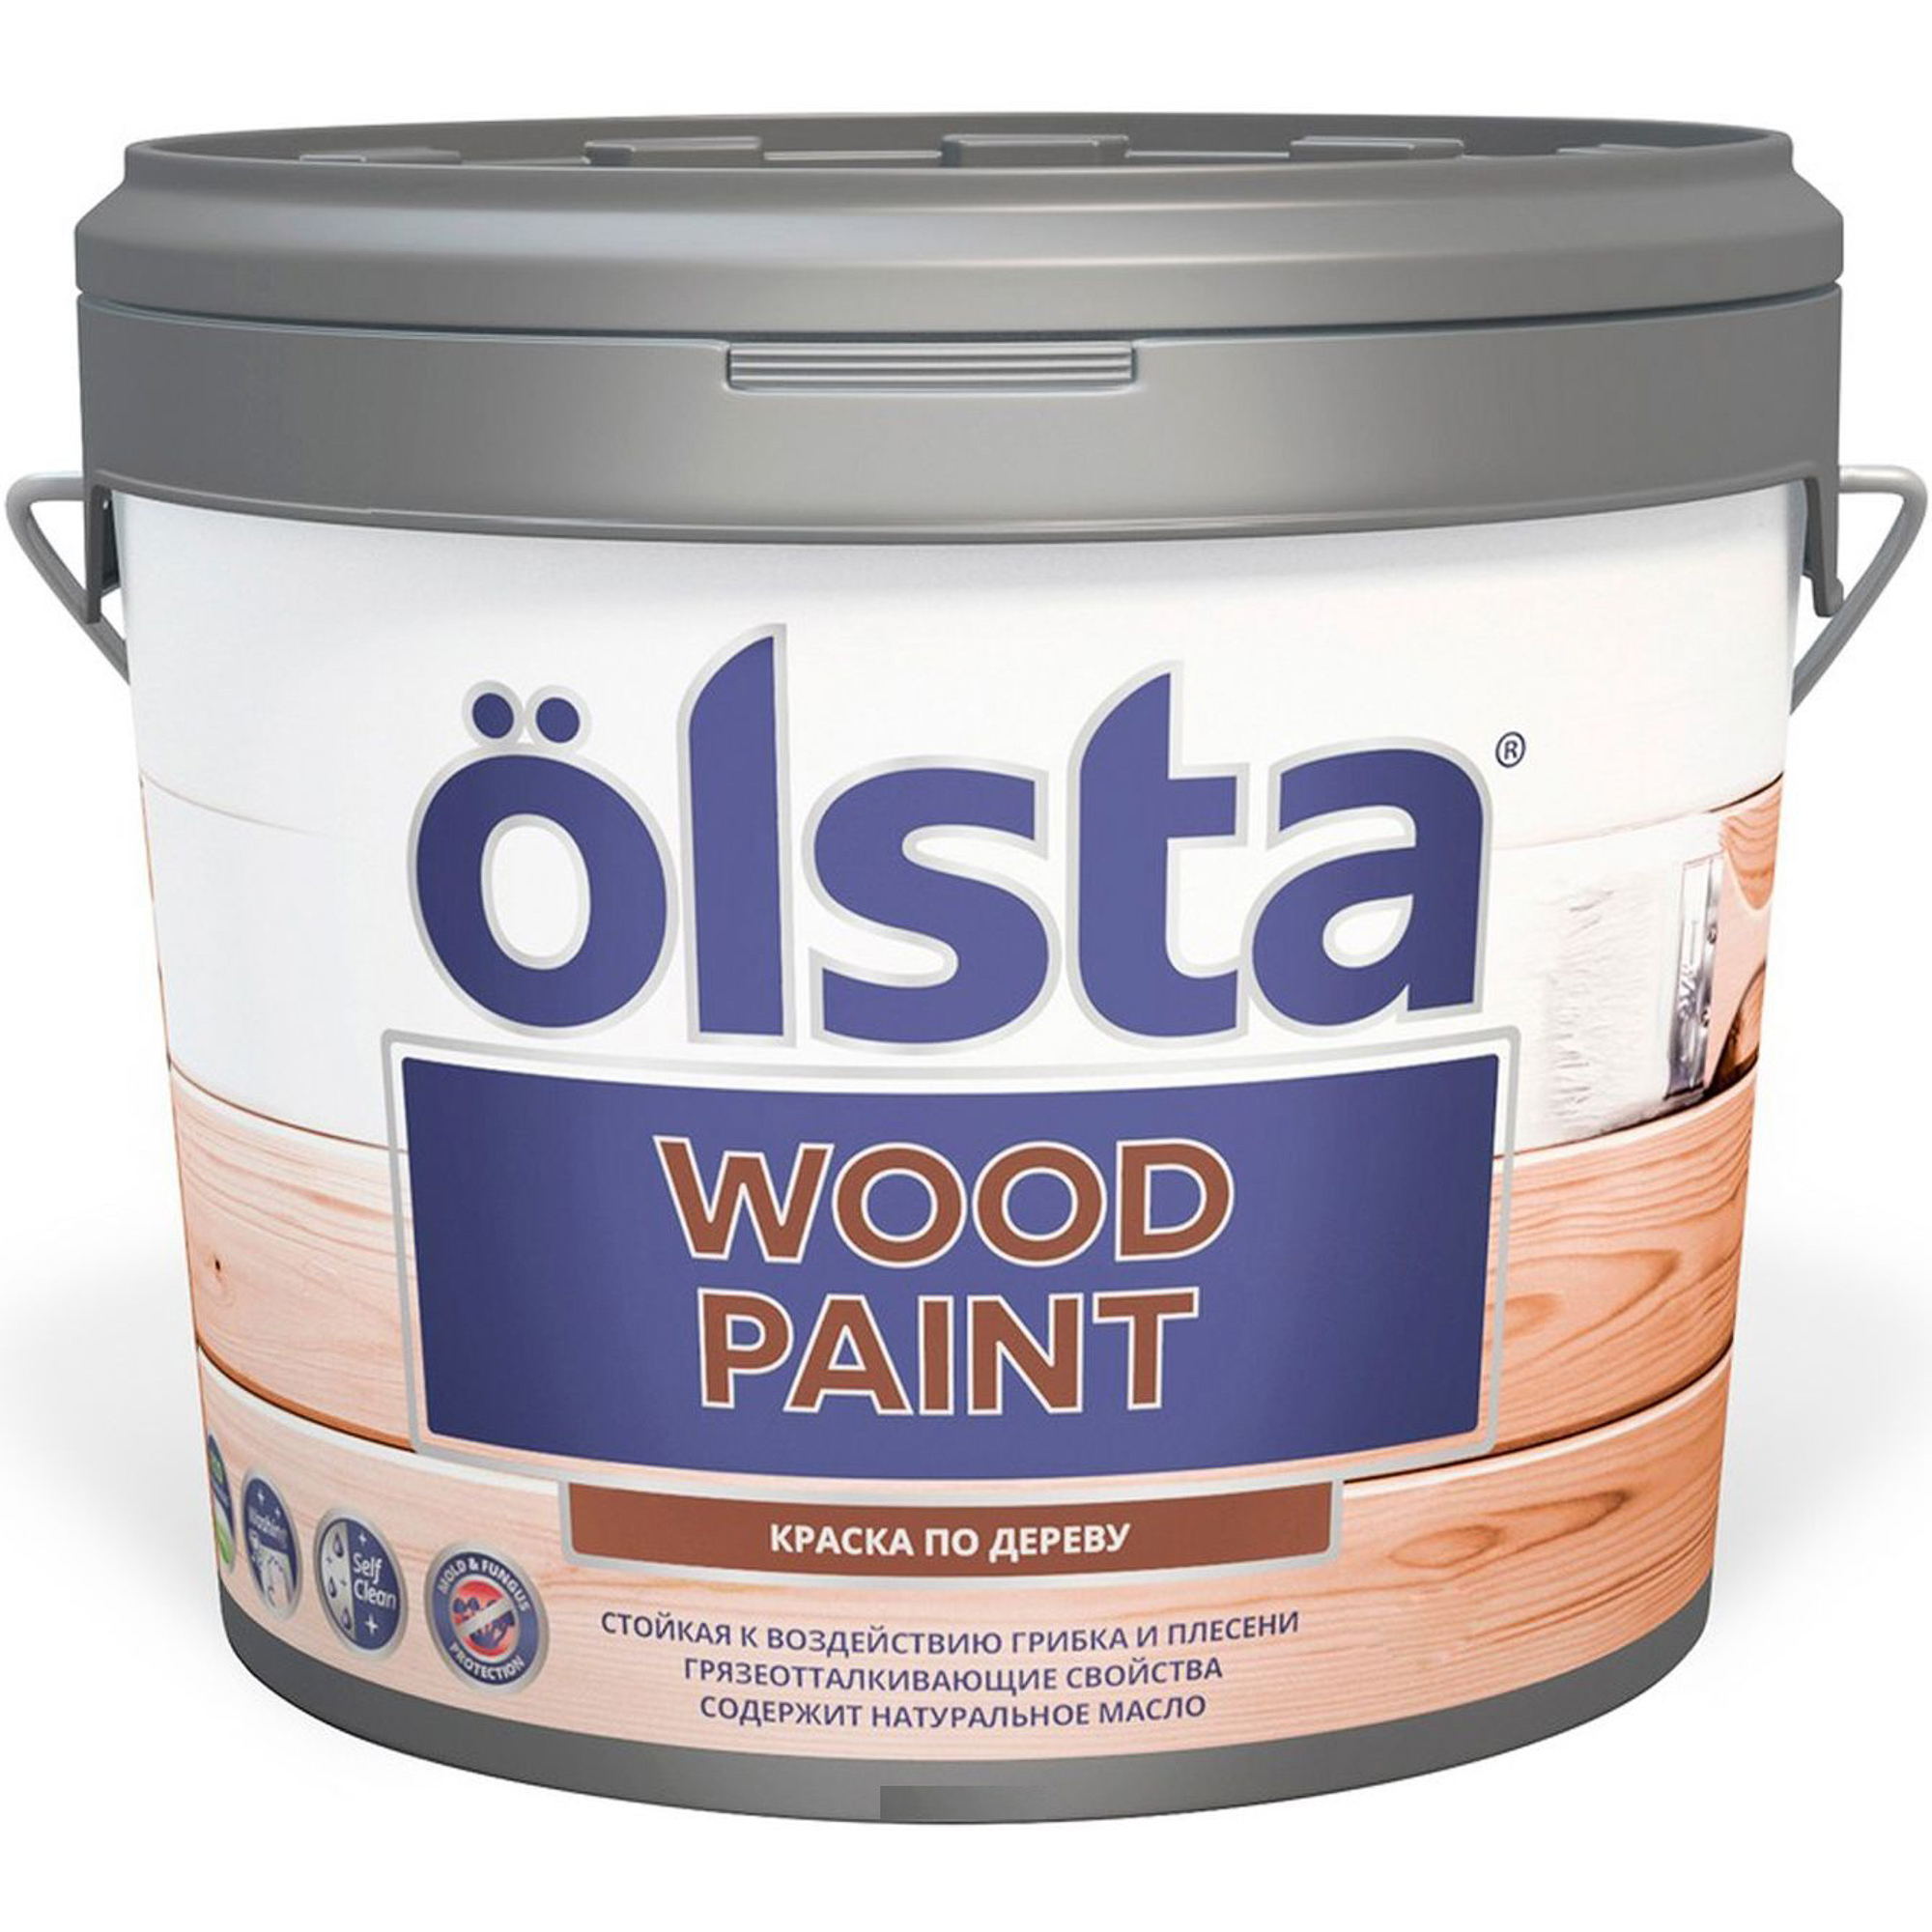 Краска Olsta wood paint для дерева a 2.7 л краска фасадная акриловая май матовая 6кг